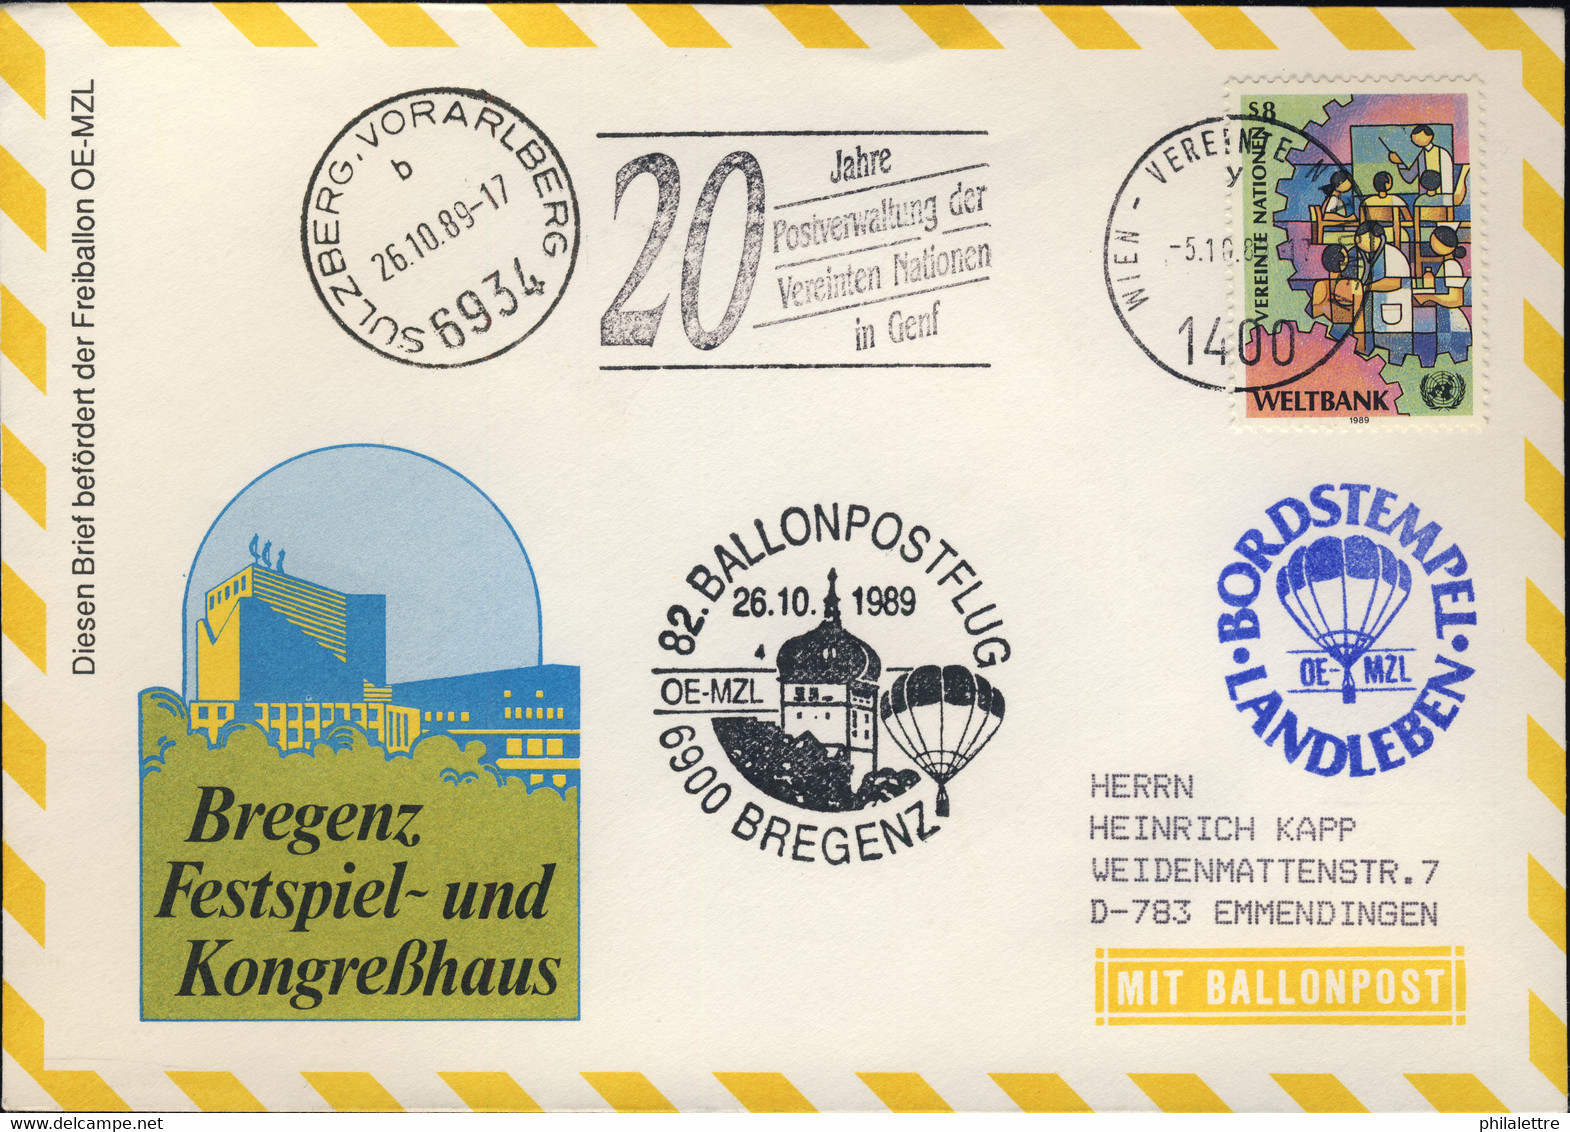 AUTRICHE / AUSTRIA / United Nations VIENNA 1989 82nd Balloon Post Flight Cover - Par Ballon